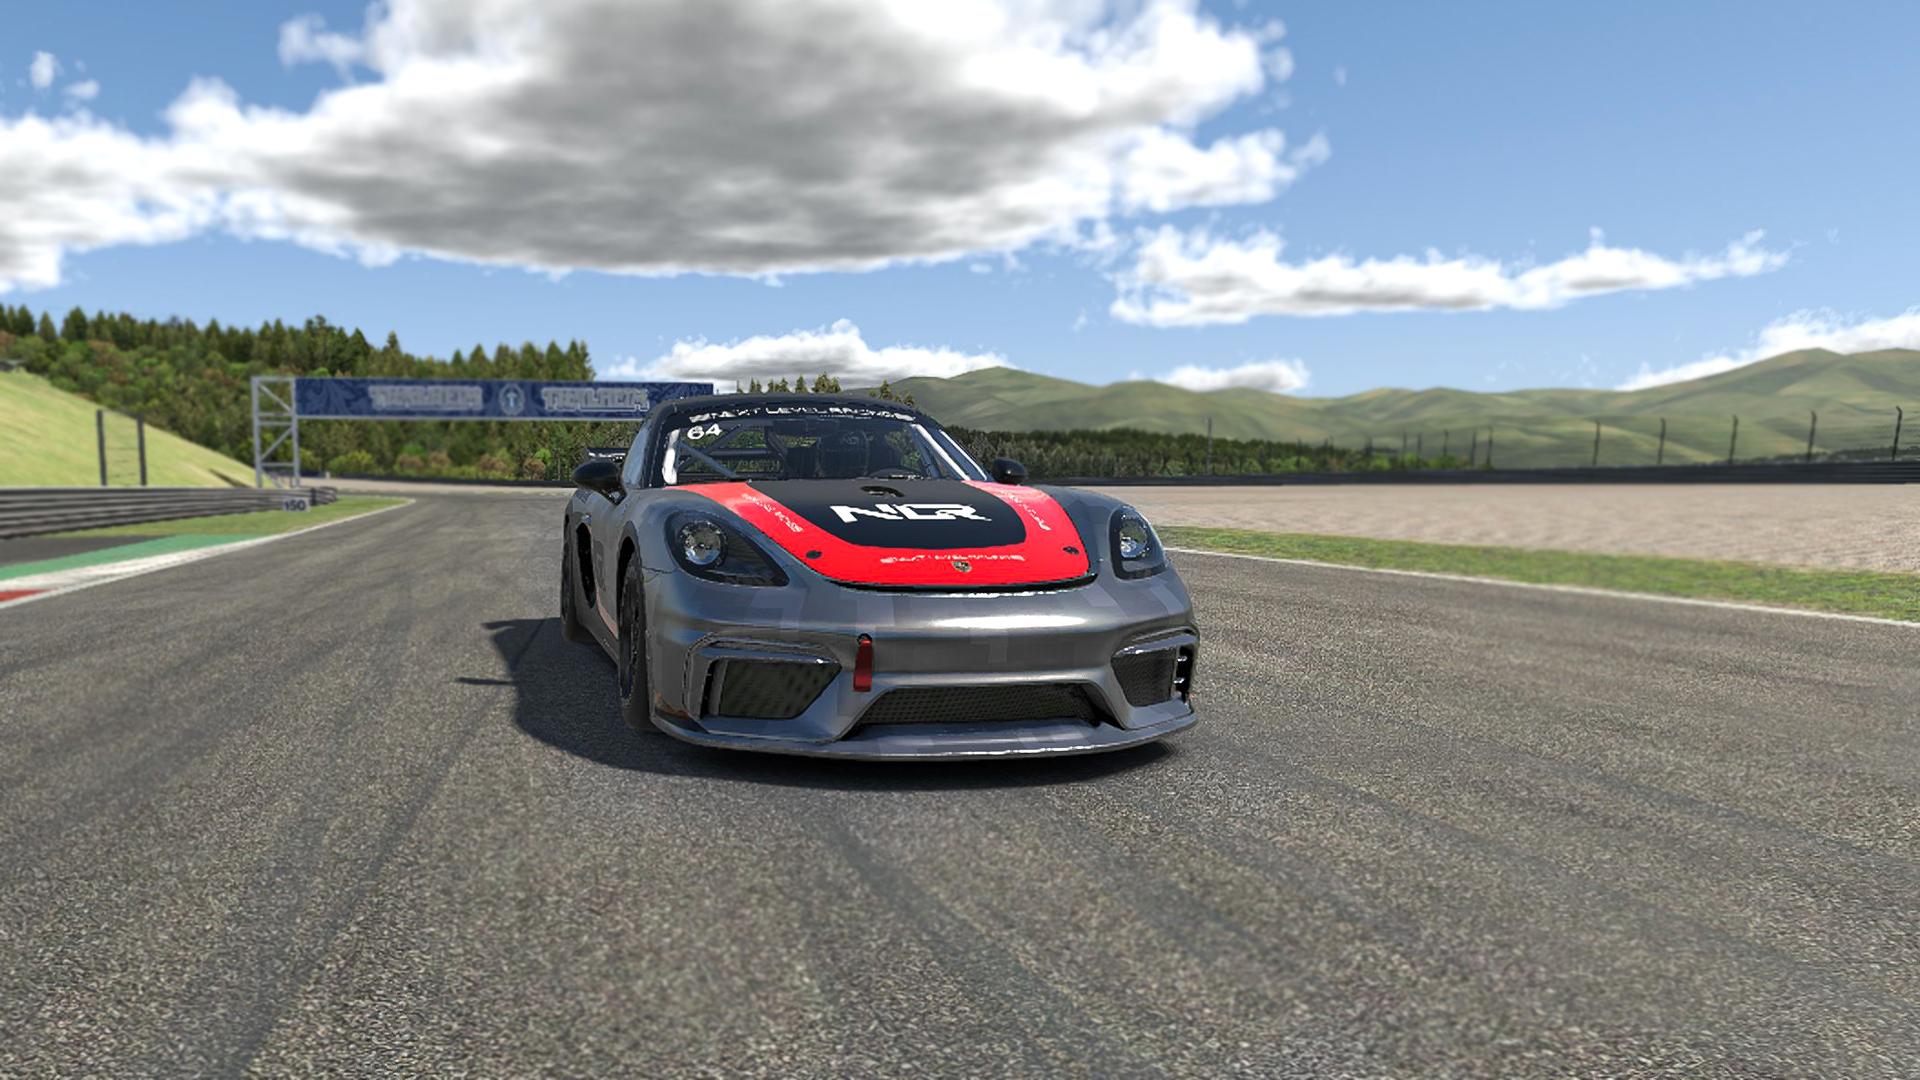 Preview of Next Level Racing Porsche 718 Cayman GT4 Clubsport MR by Brendan Harris